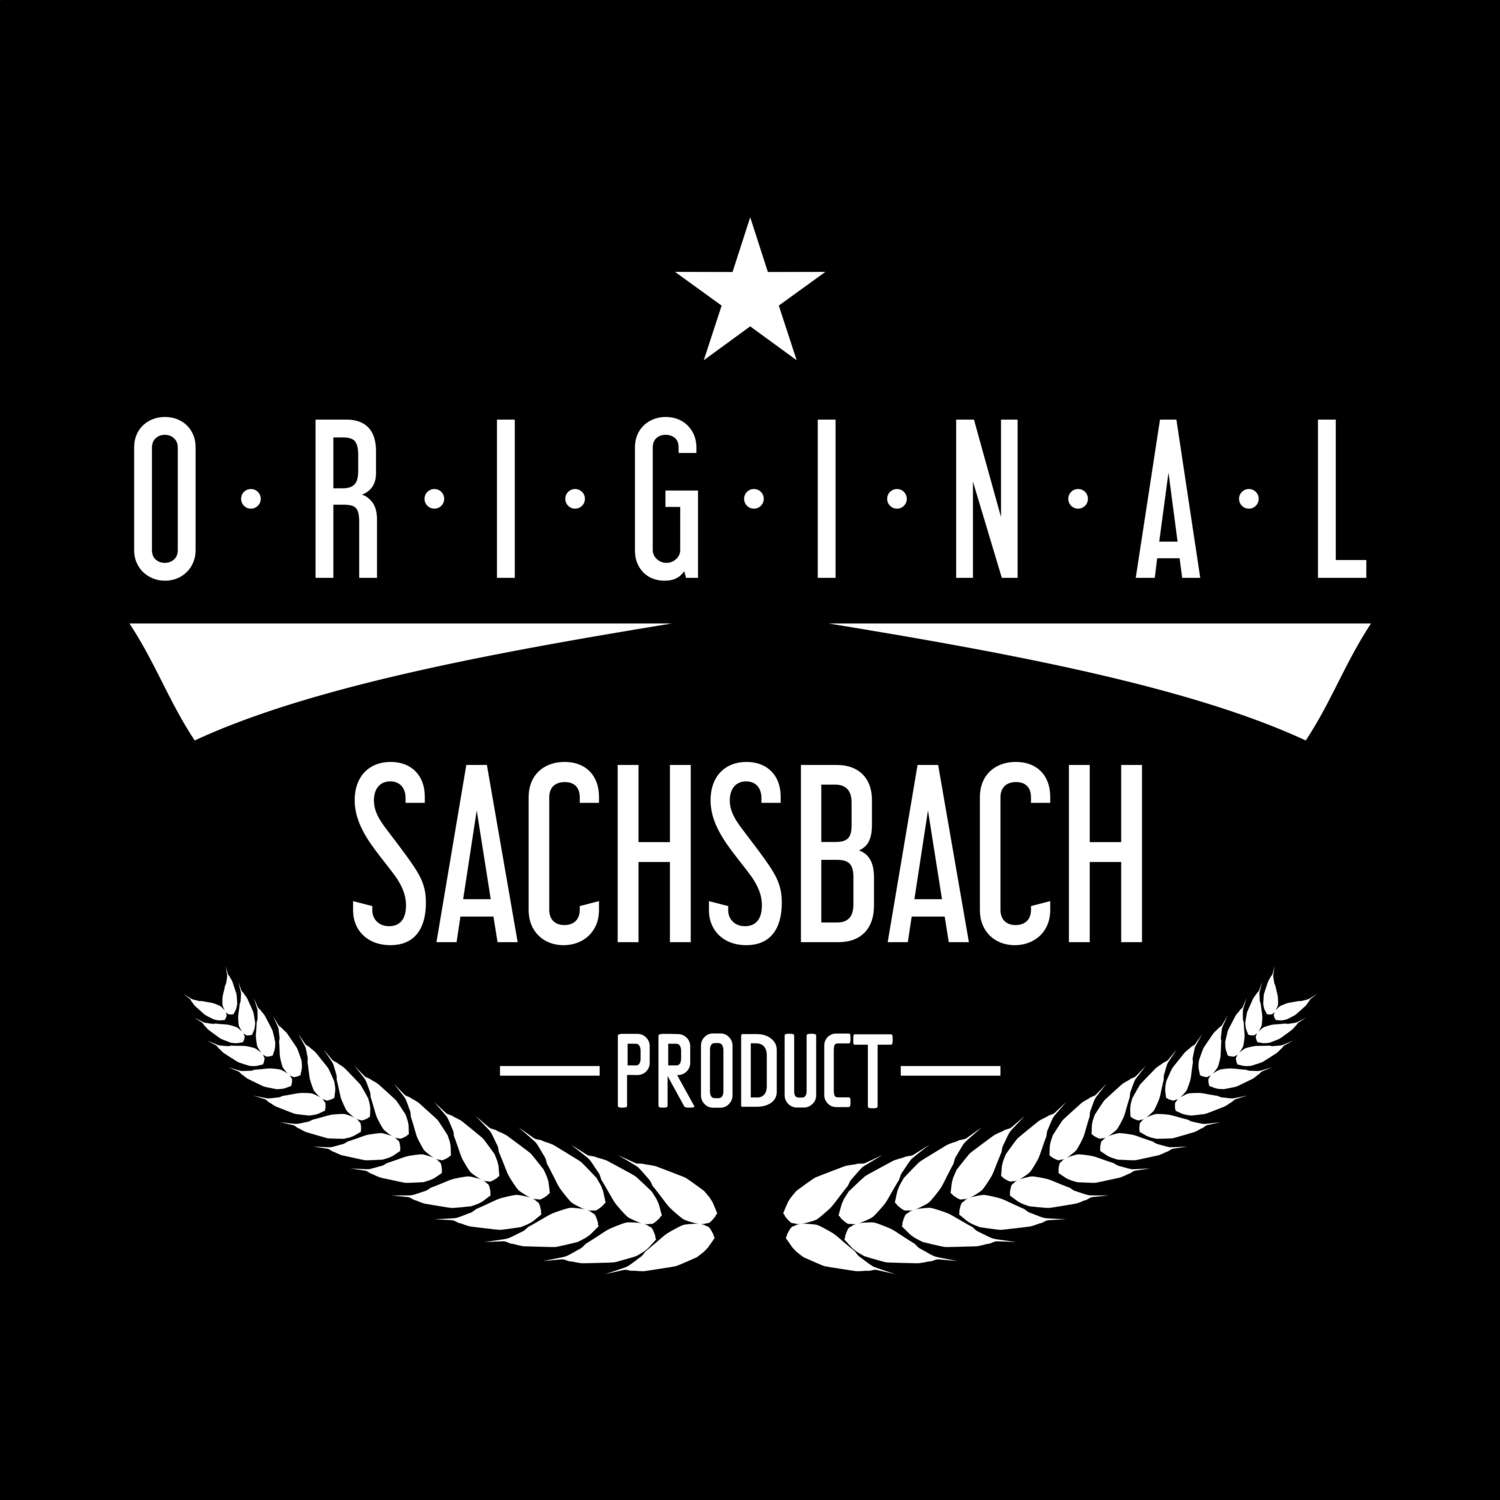 Sachsbach T-Shirt »Original Product«